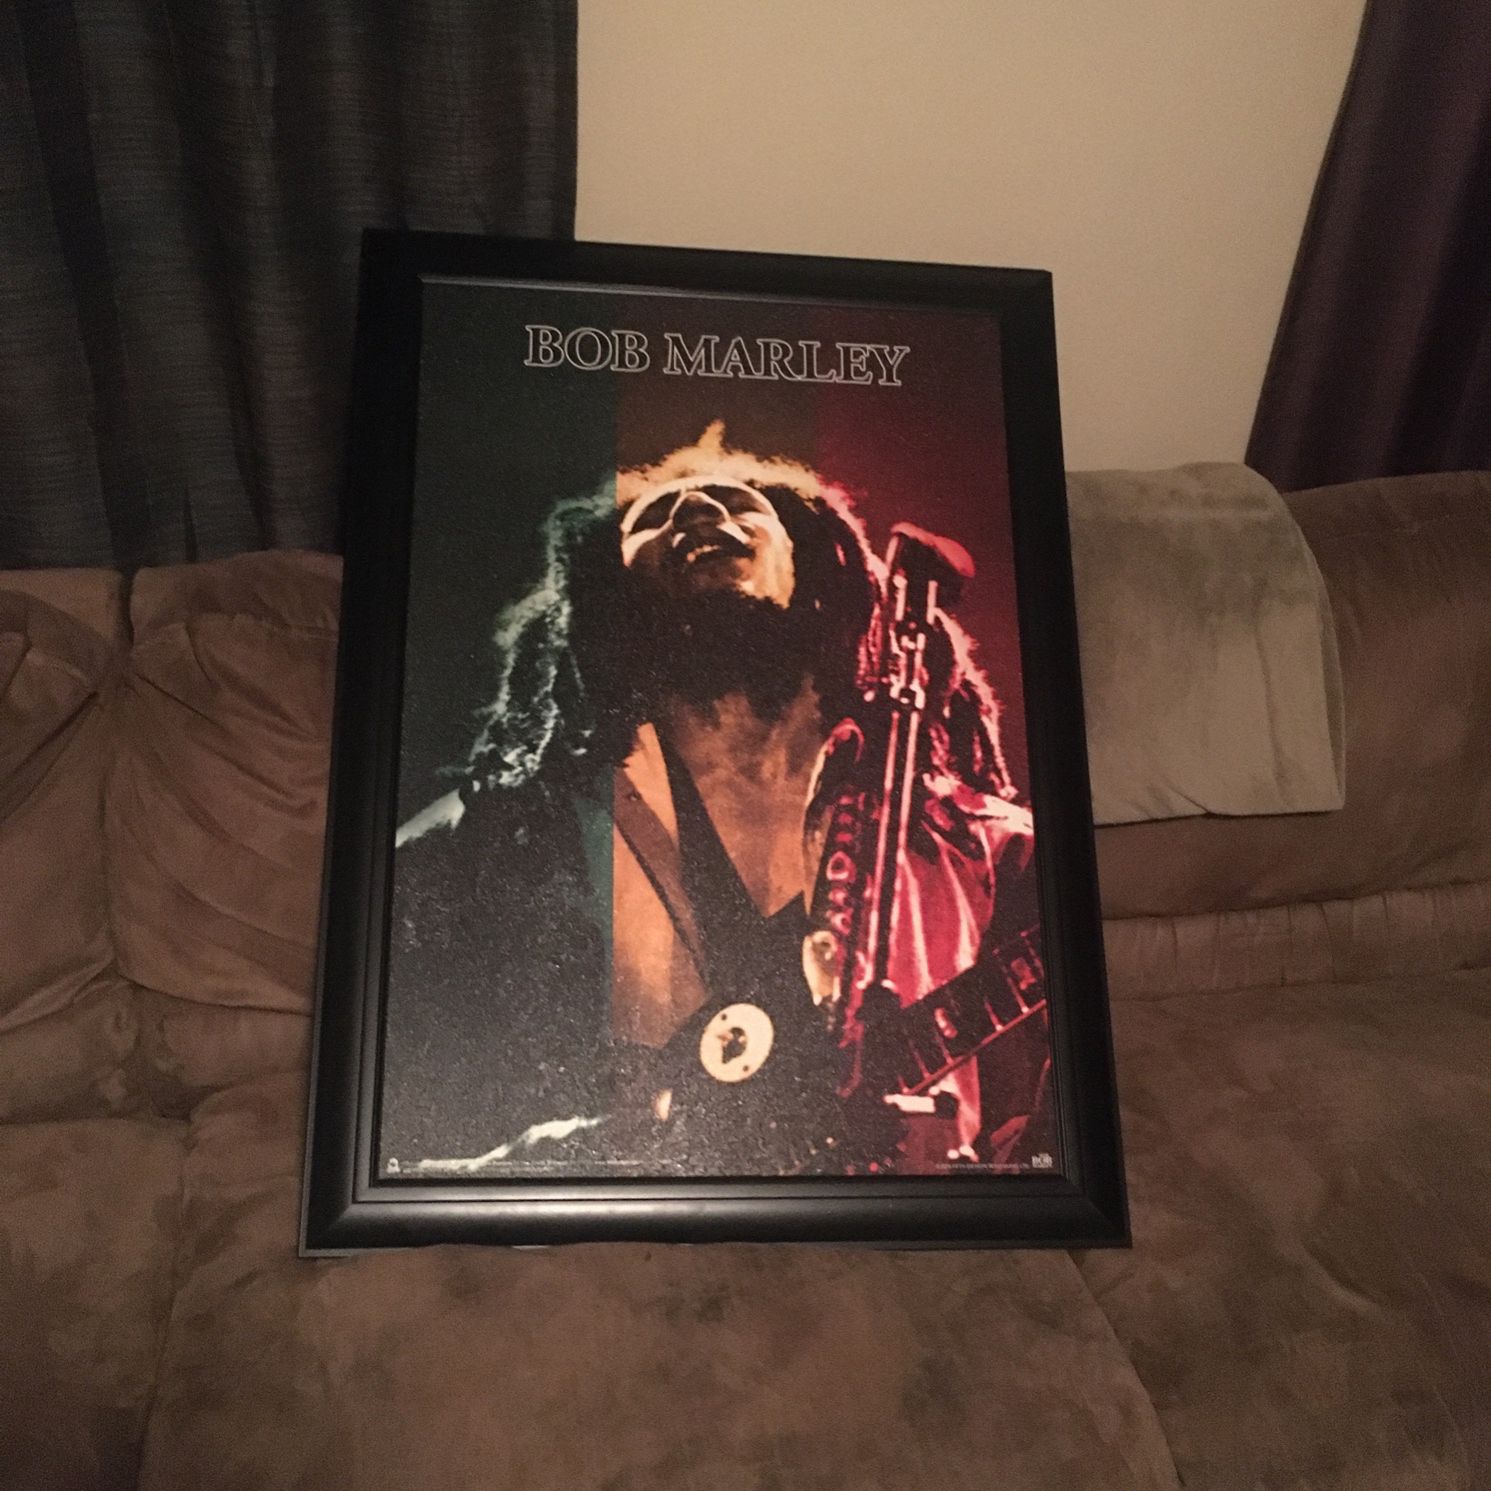 Bob Marley Picture Frame $20 Or Best Offer!